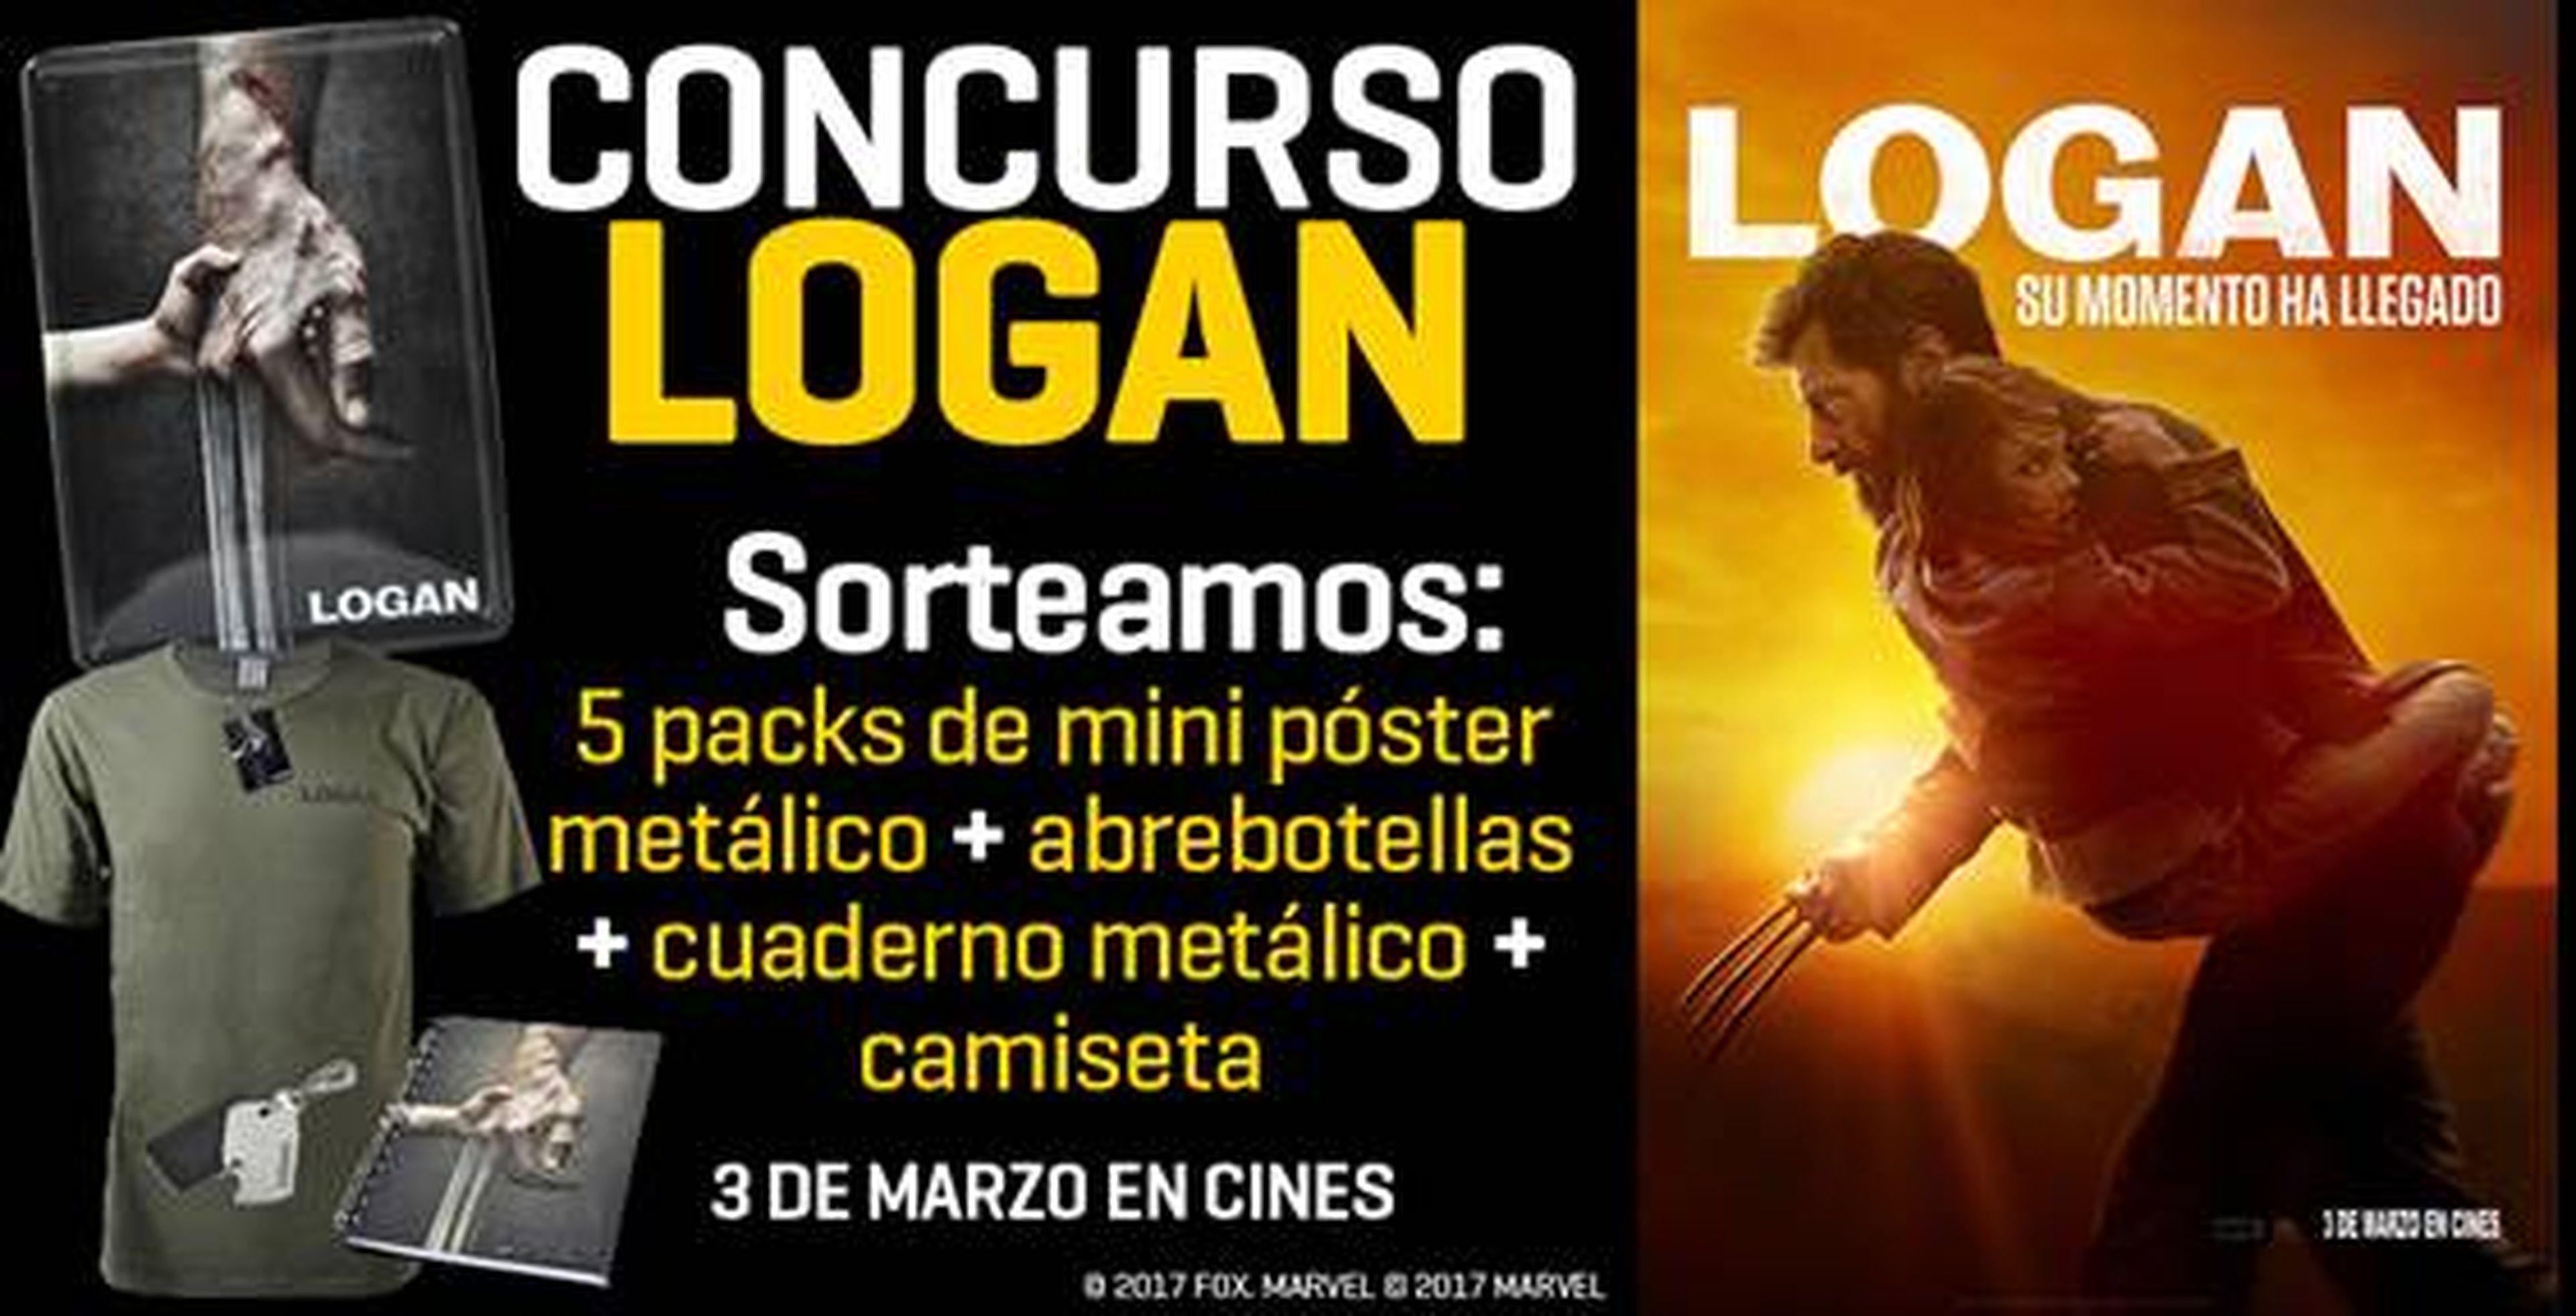 Concurso Logan